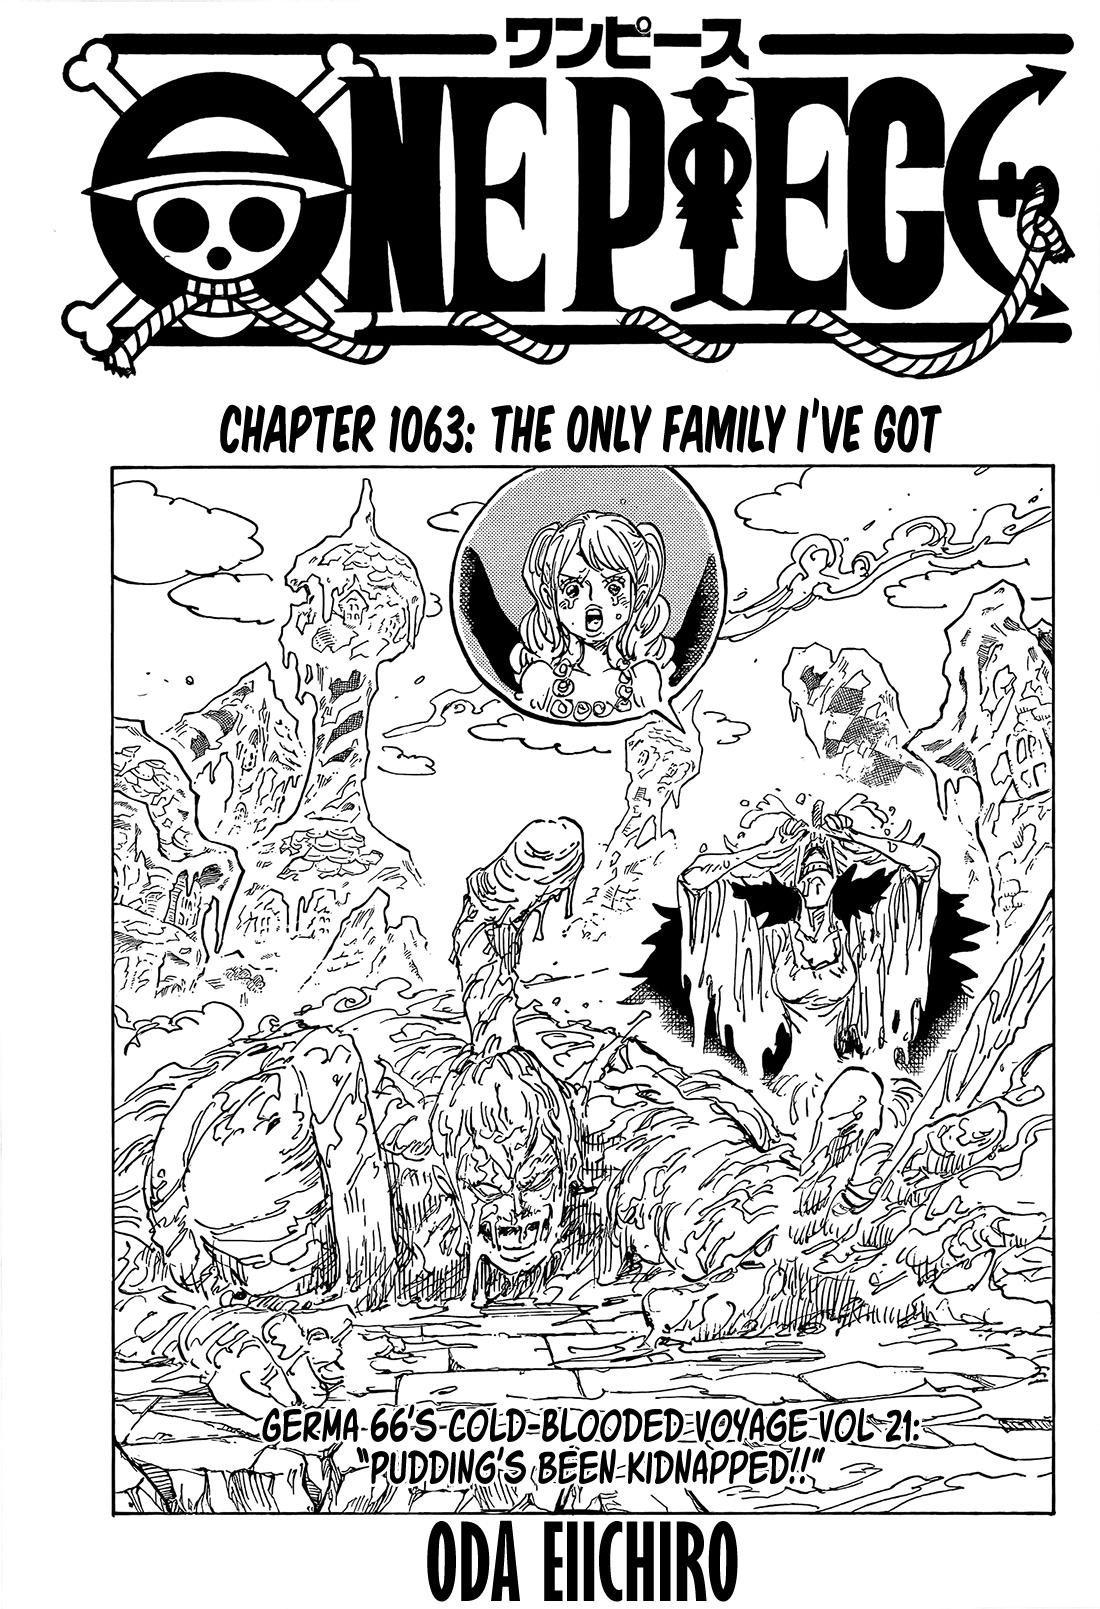 Read One Piece Chapter 746 : Stars on Mangakakalot